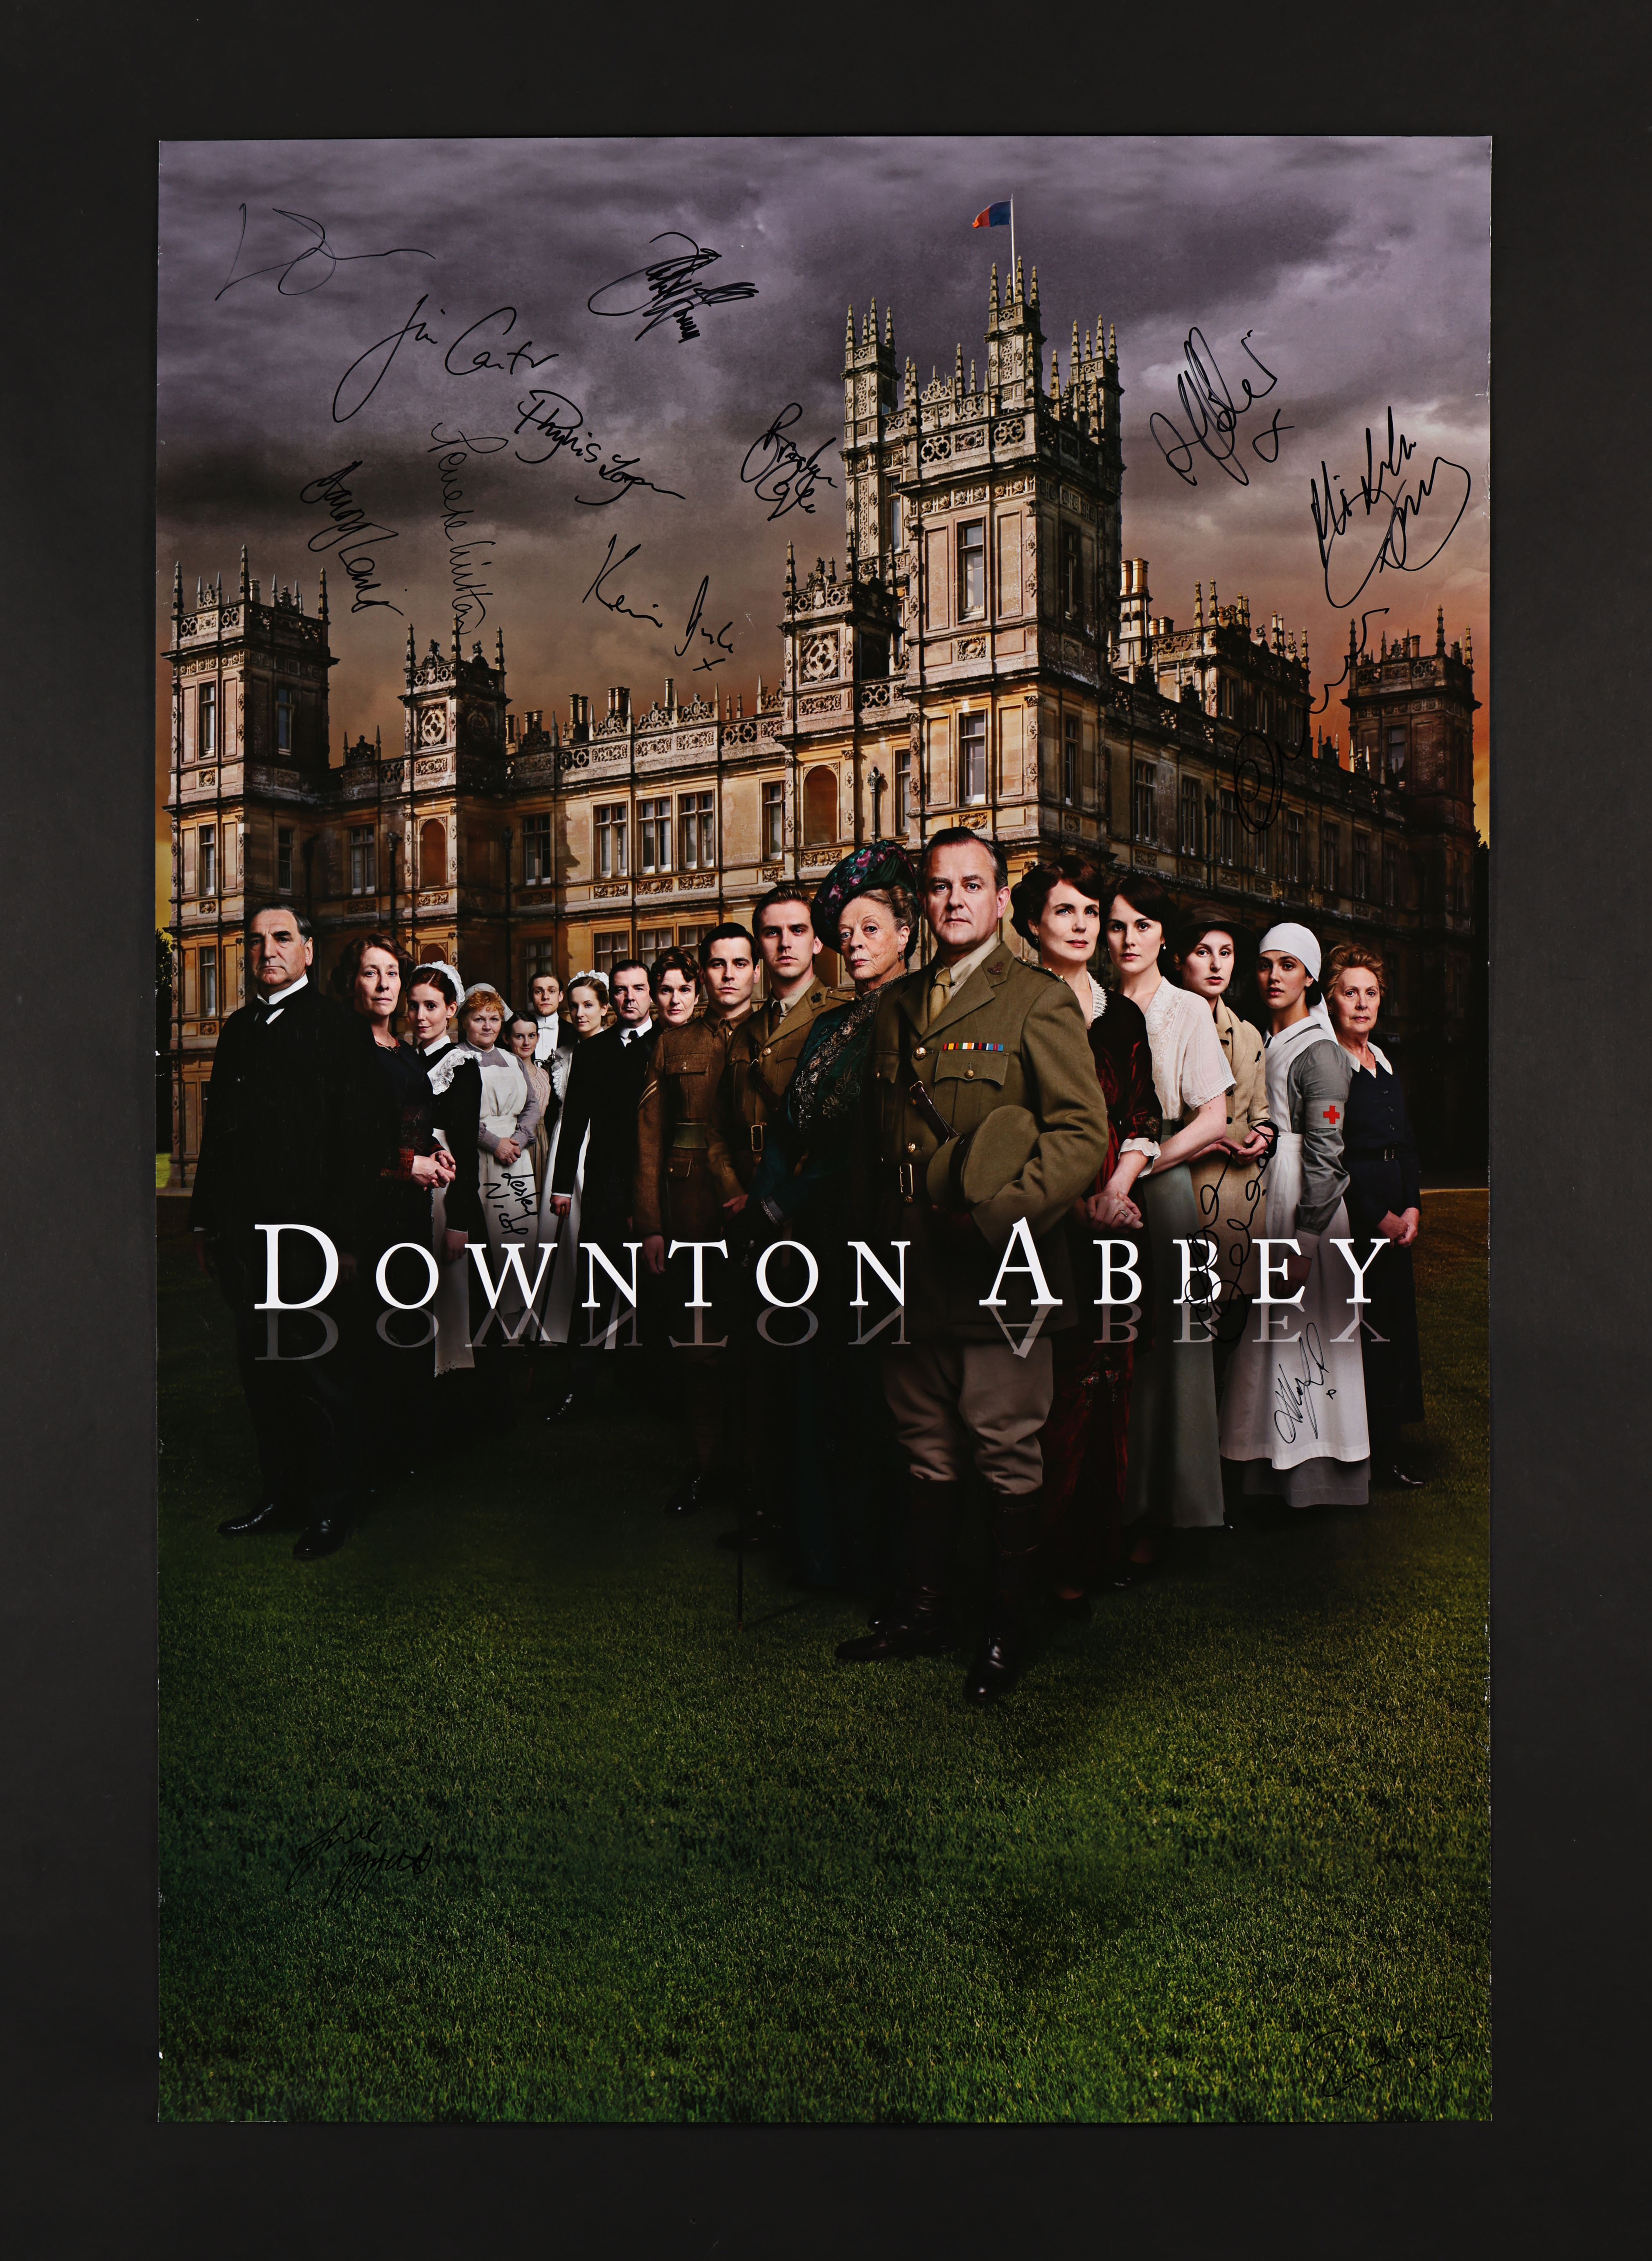 DOWNTON ABBEY (T.V. SERIES, 2010-2015) - Hugh Bonneville, Penelope Wilton, Joanne Froggatt, Jim Cart